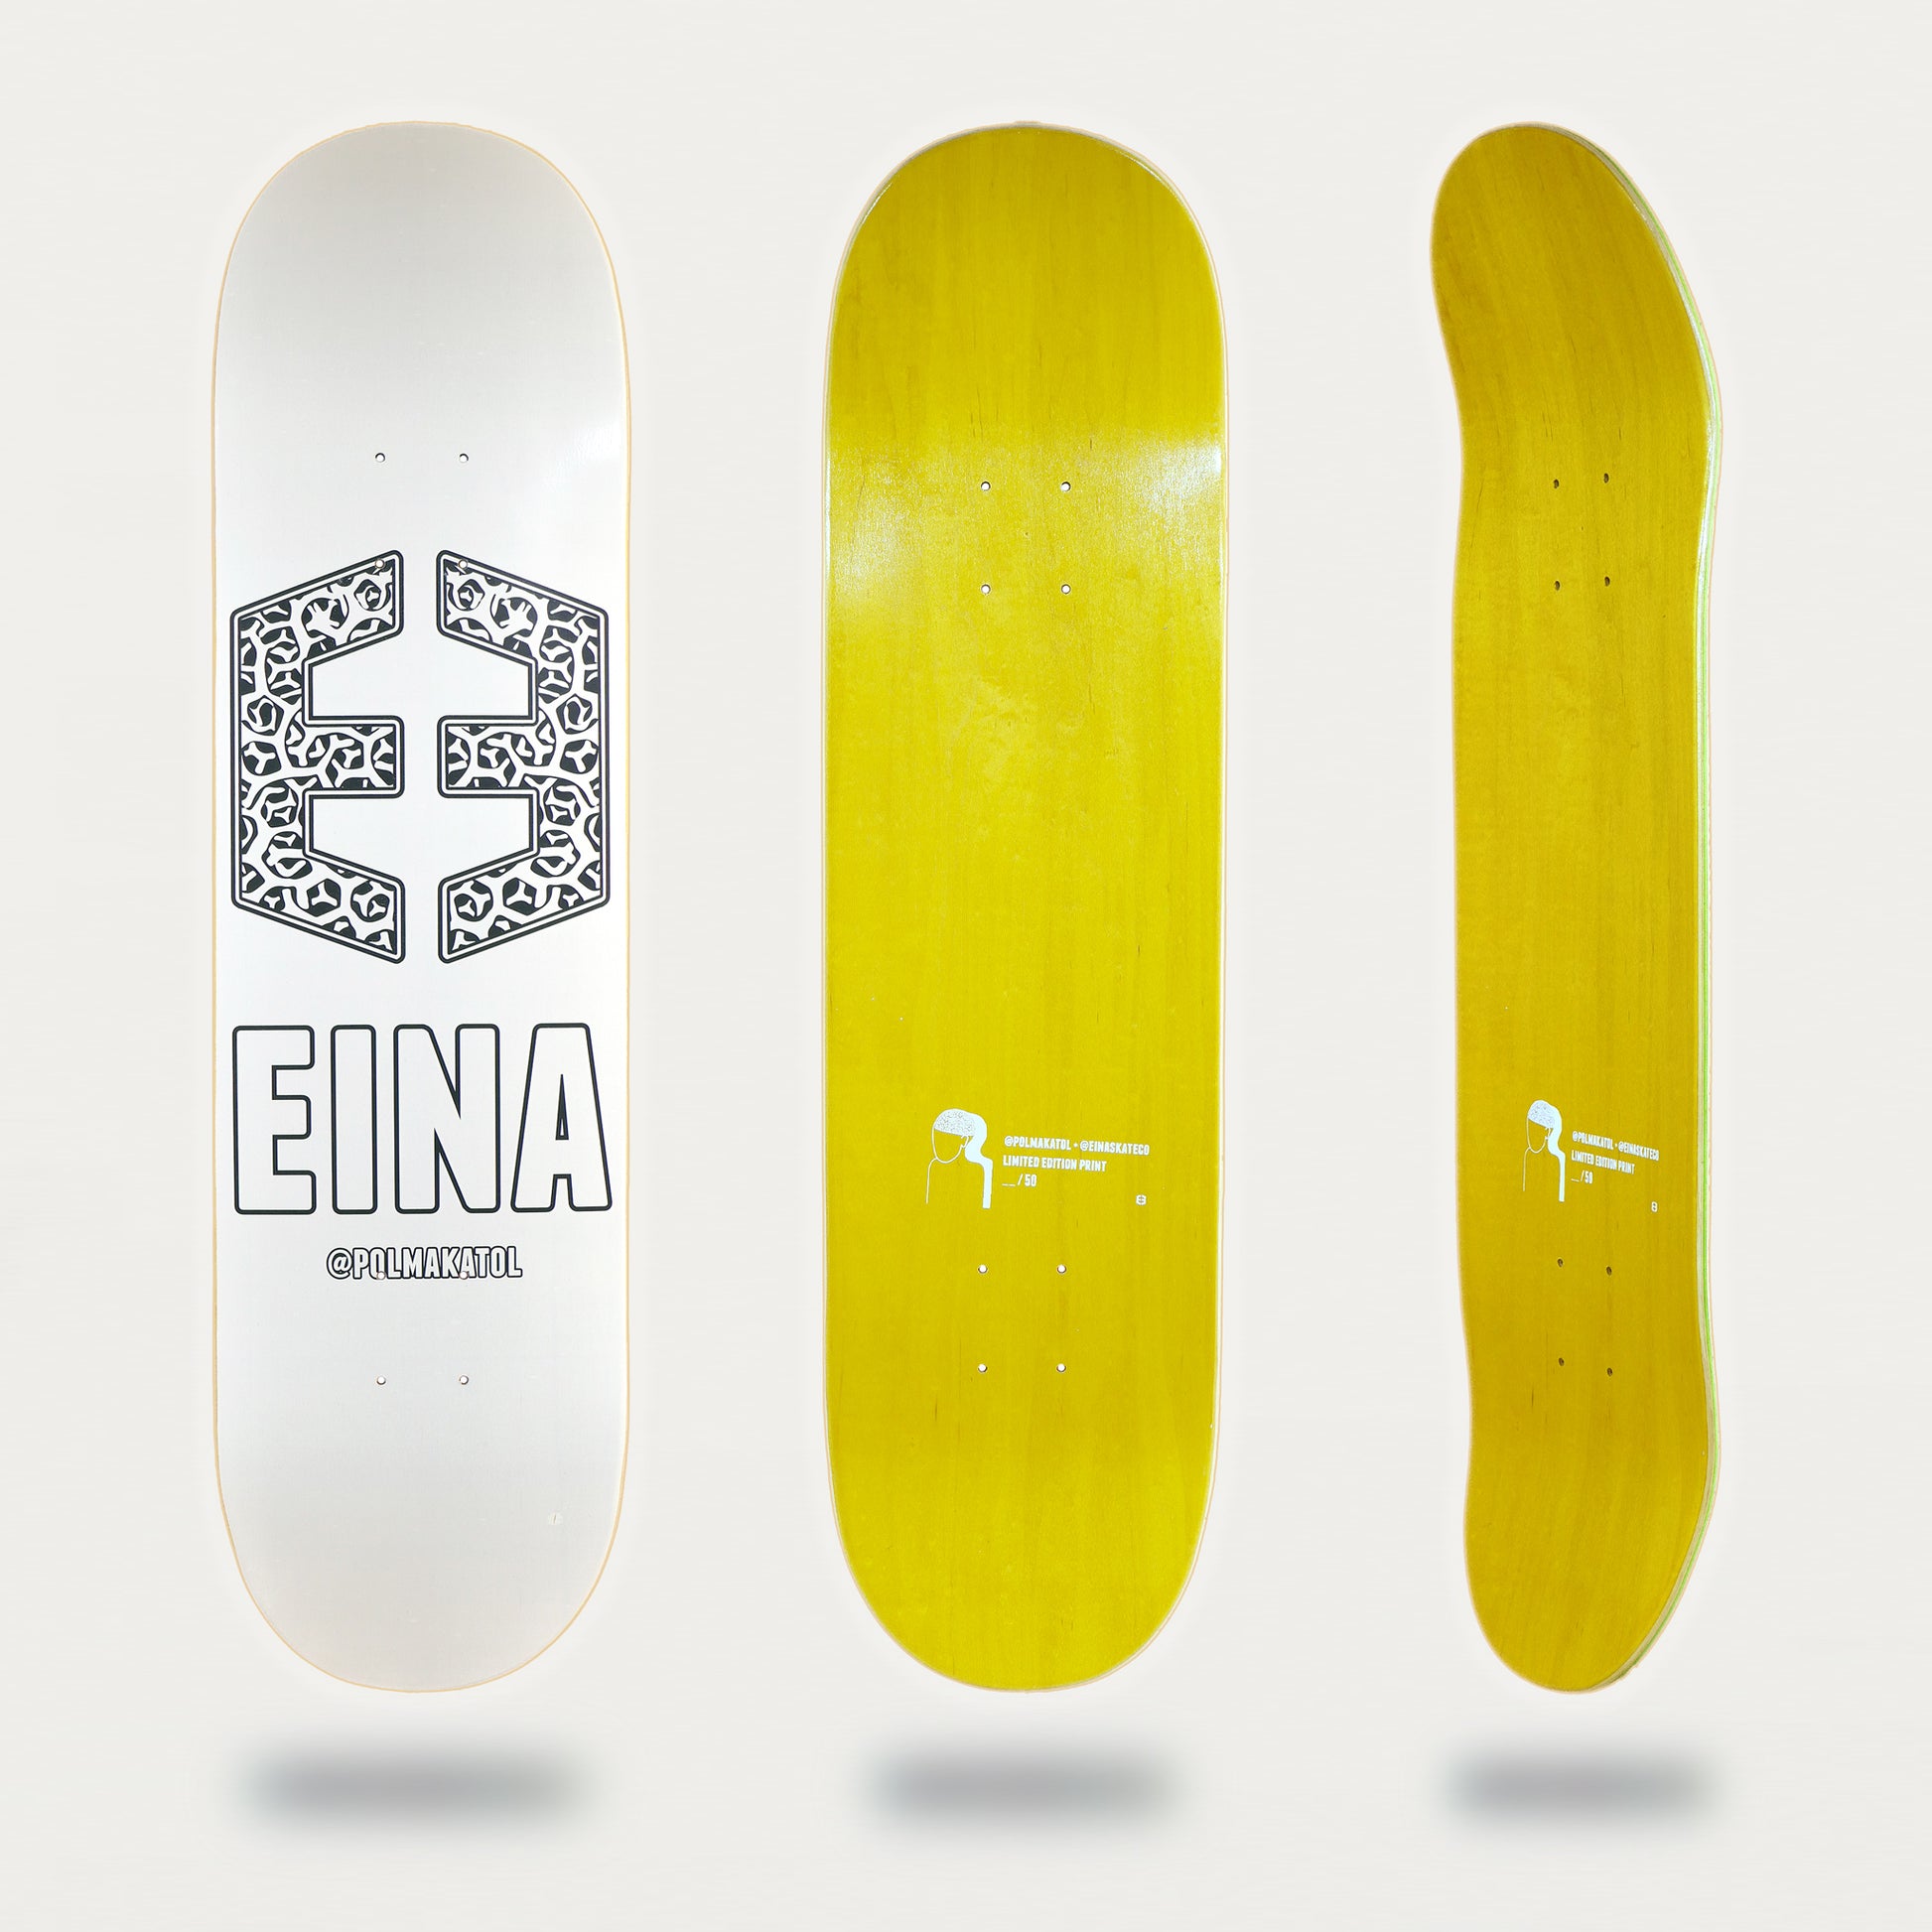 Tabla de Eina skateboard company Pol Amadó "makatol e-logo" 8,25 pulgadas